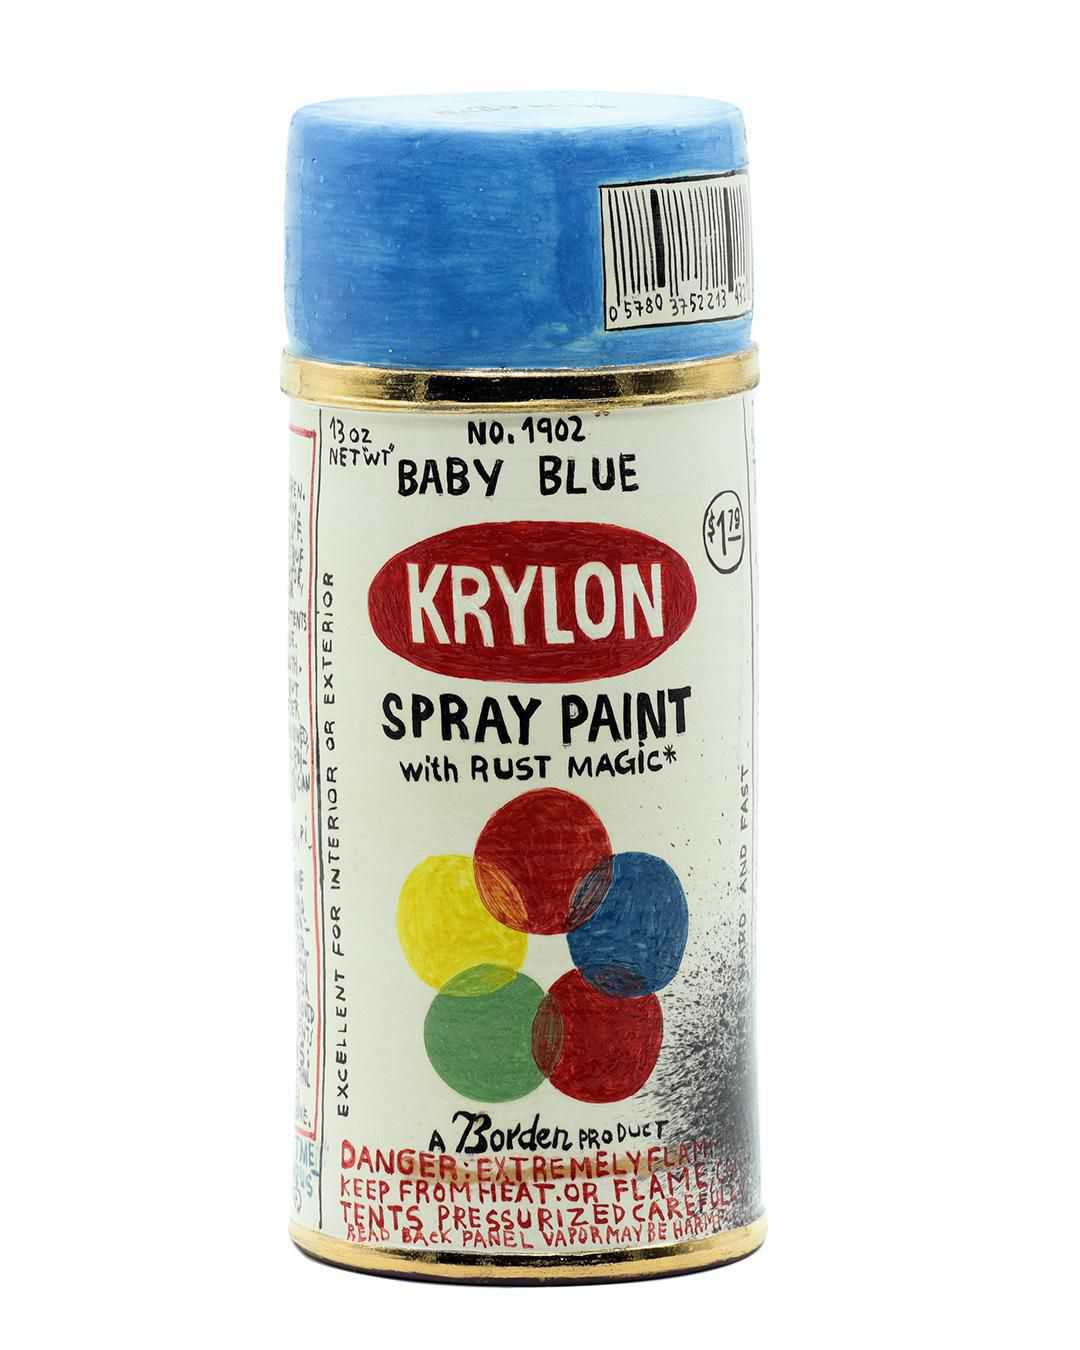 Ceramic Krylon Spray Can in Baby Blue